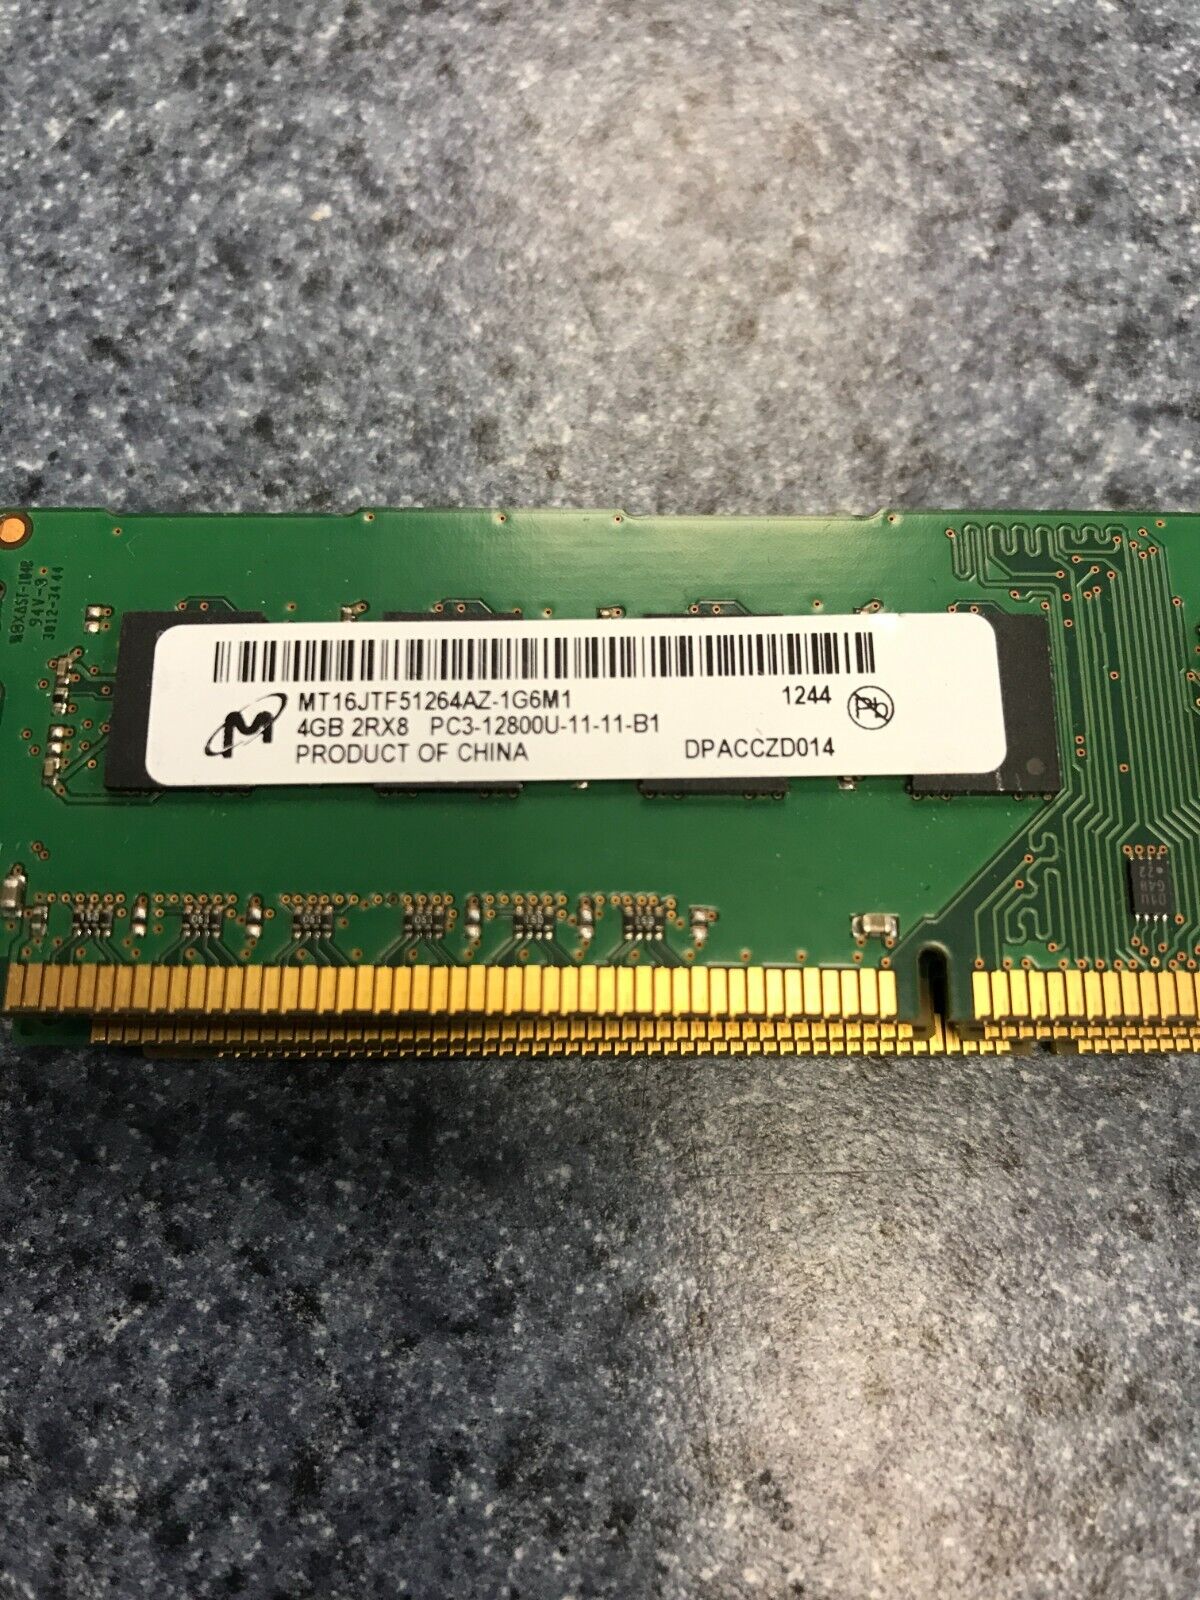 Micron 4GB 2RX8 PC3-12800U-11-11-B1 MEMORY